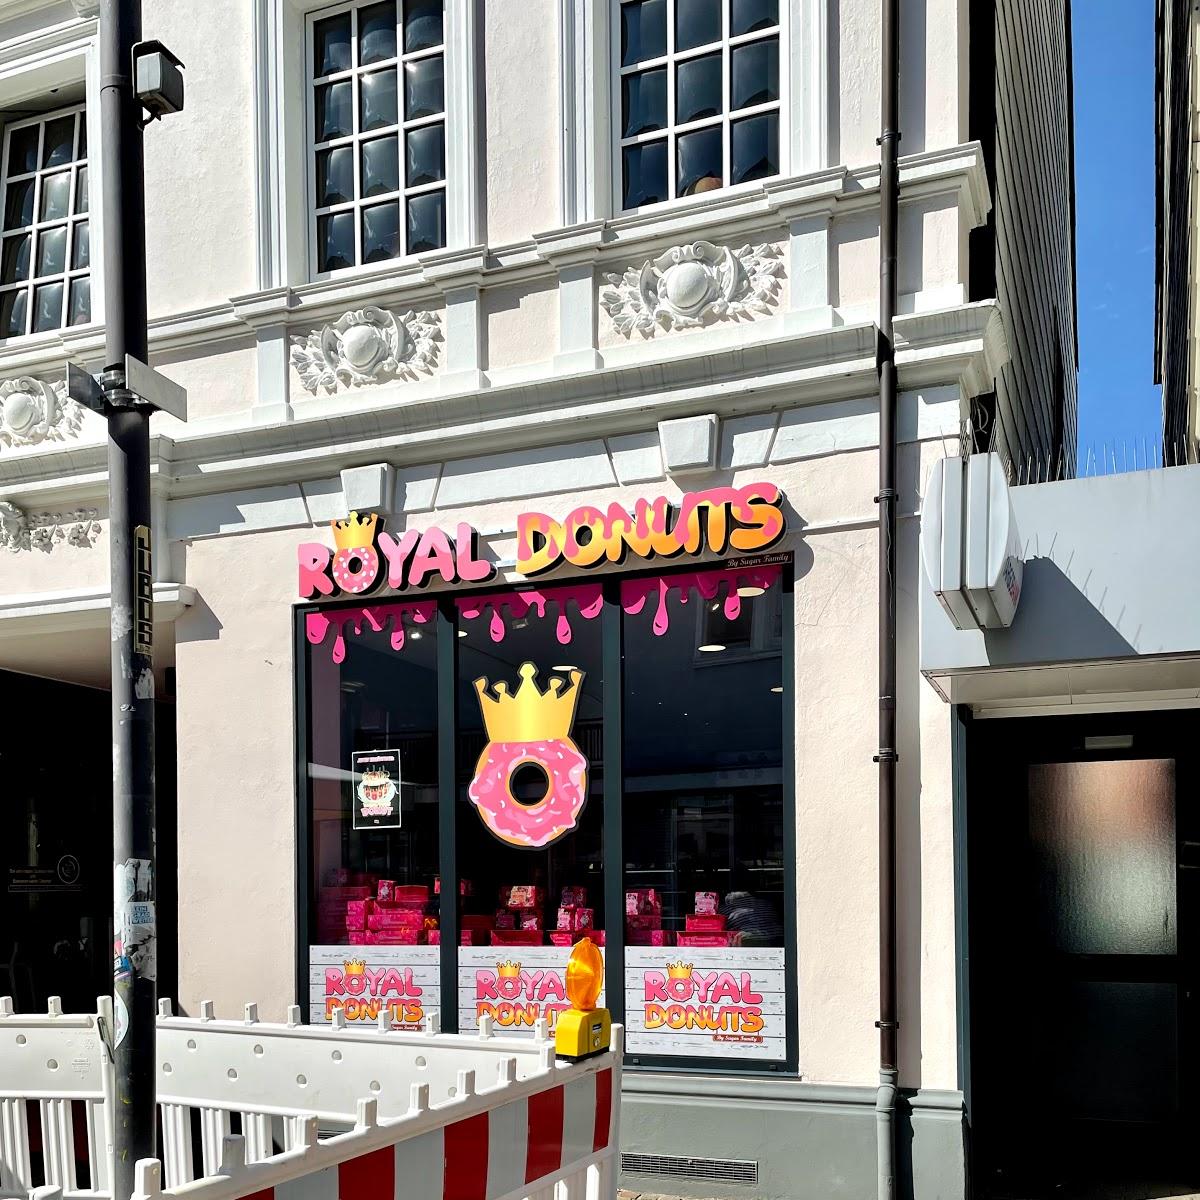 Restaurant "Royal Donuts" in Unna